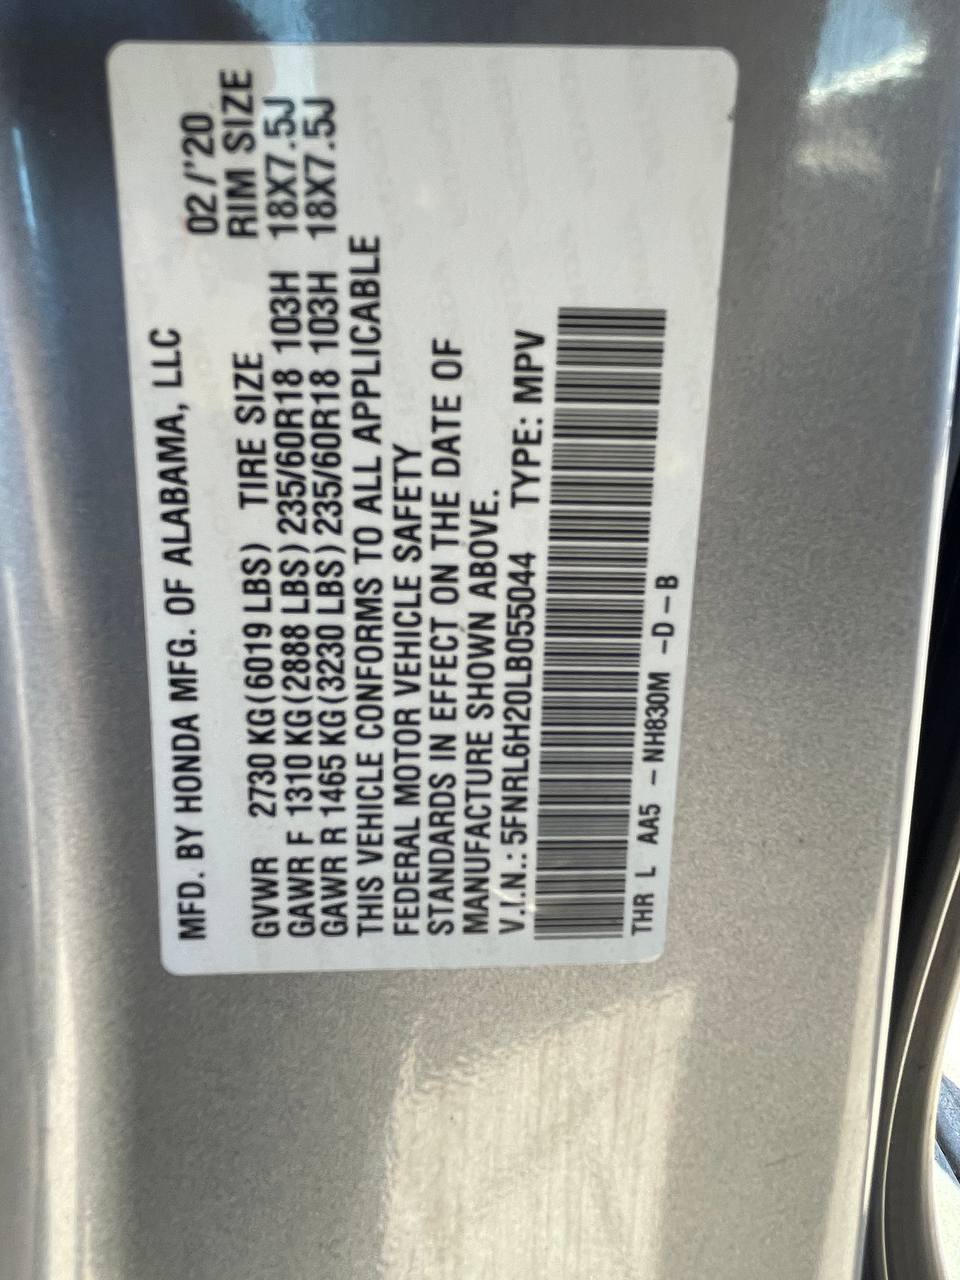 Used - Honda Odyssey LX Minivan for sale in Staten Island NY